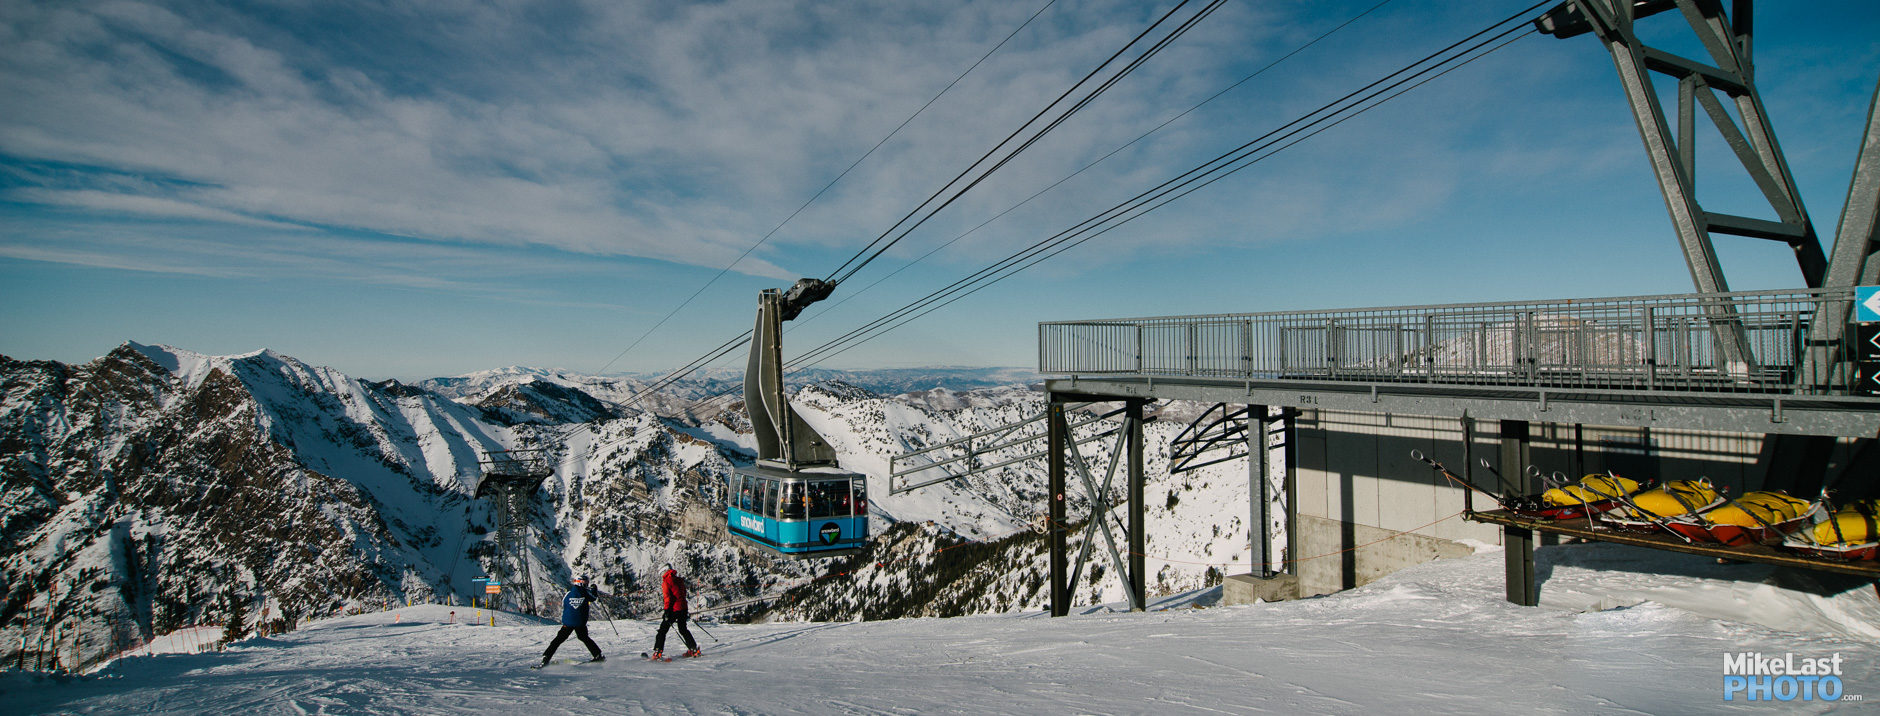 The tram arrives at the summit of Hidden Peak at Snowbird Mountain Resort.